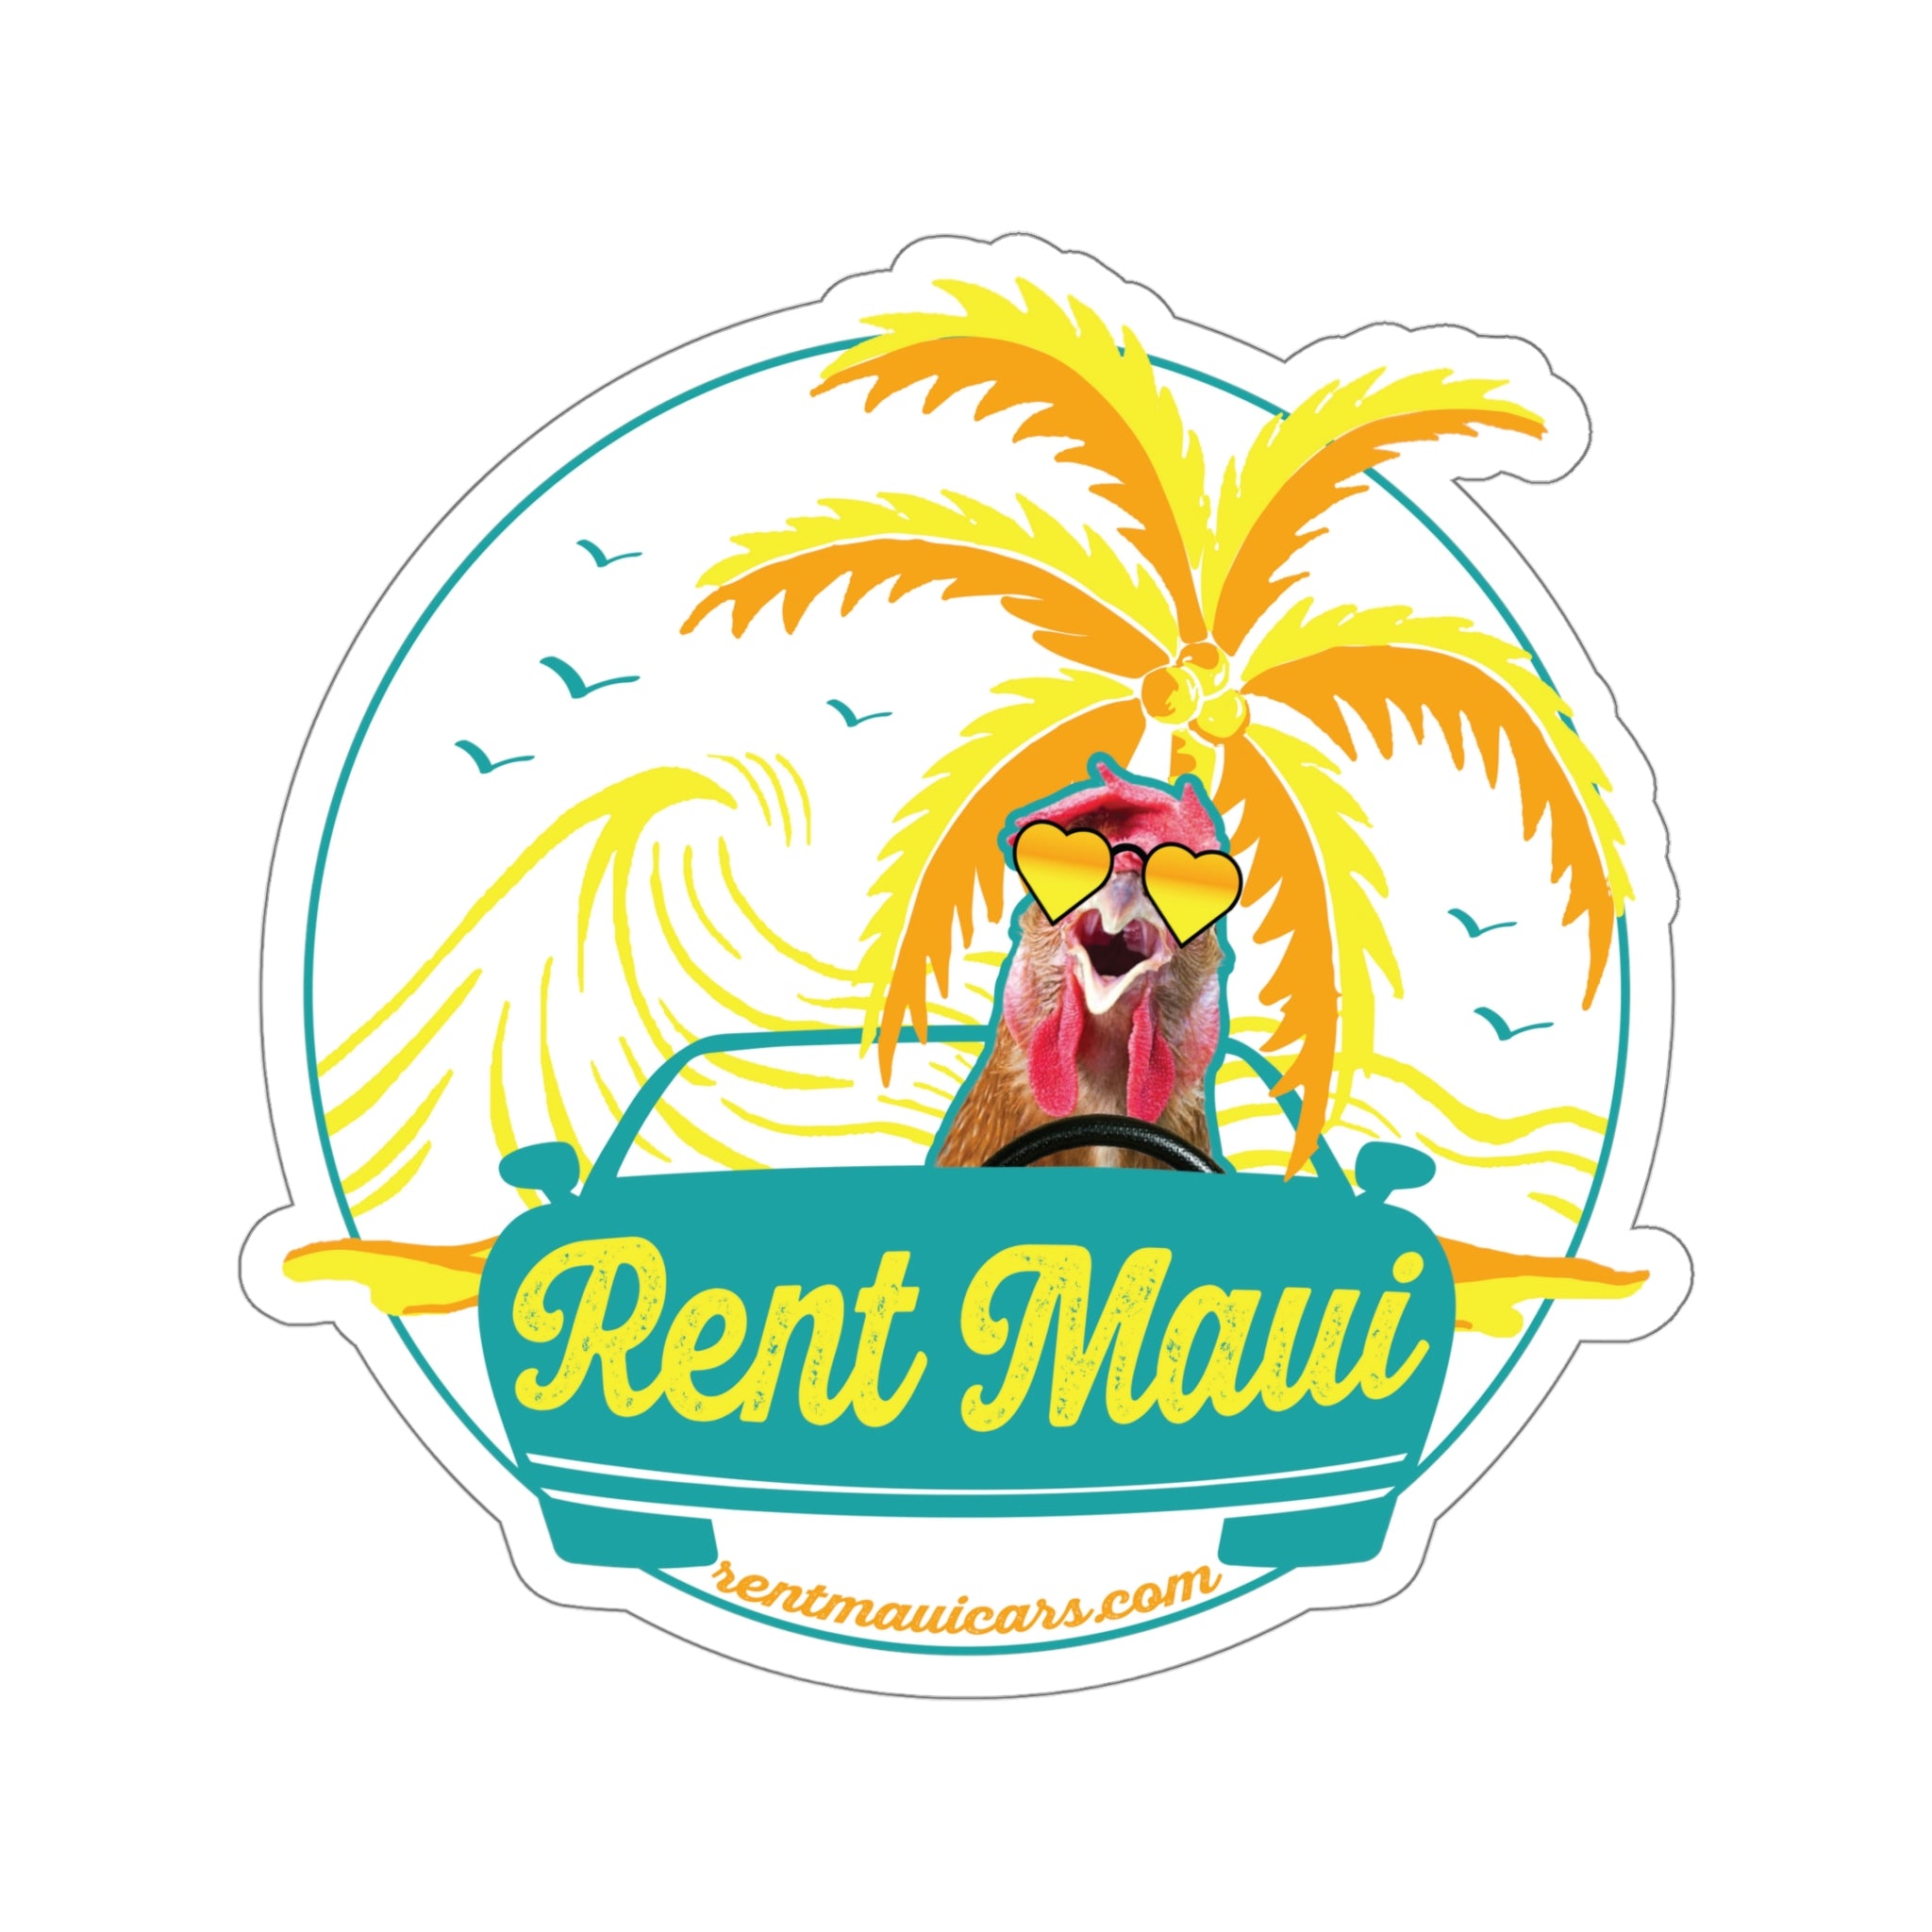 Rent Maui Ocean And Palm Tree Chicken Kiss-Cut Sticker